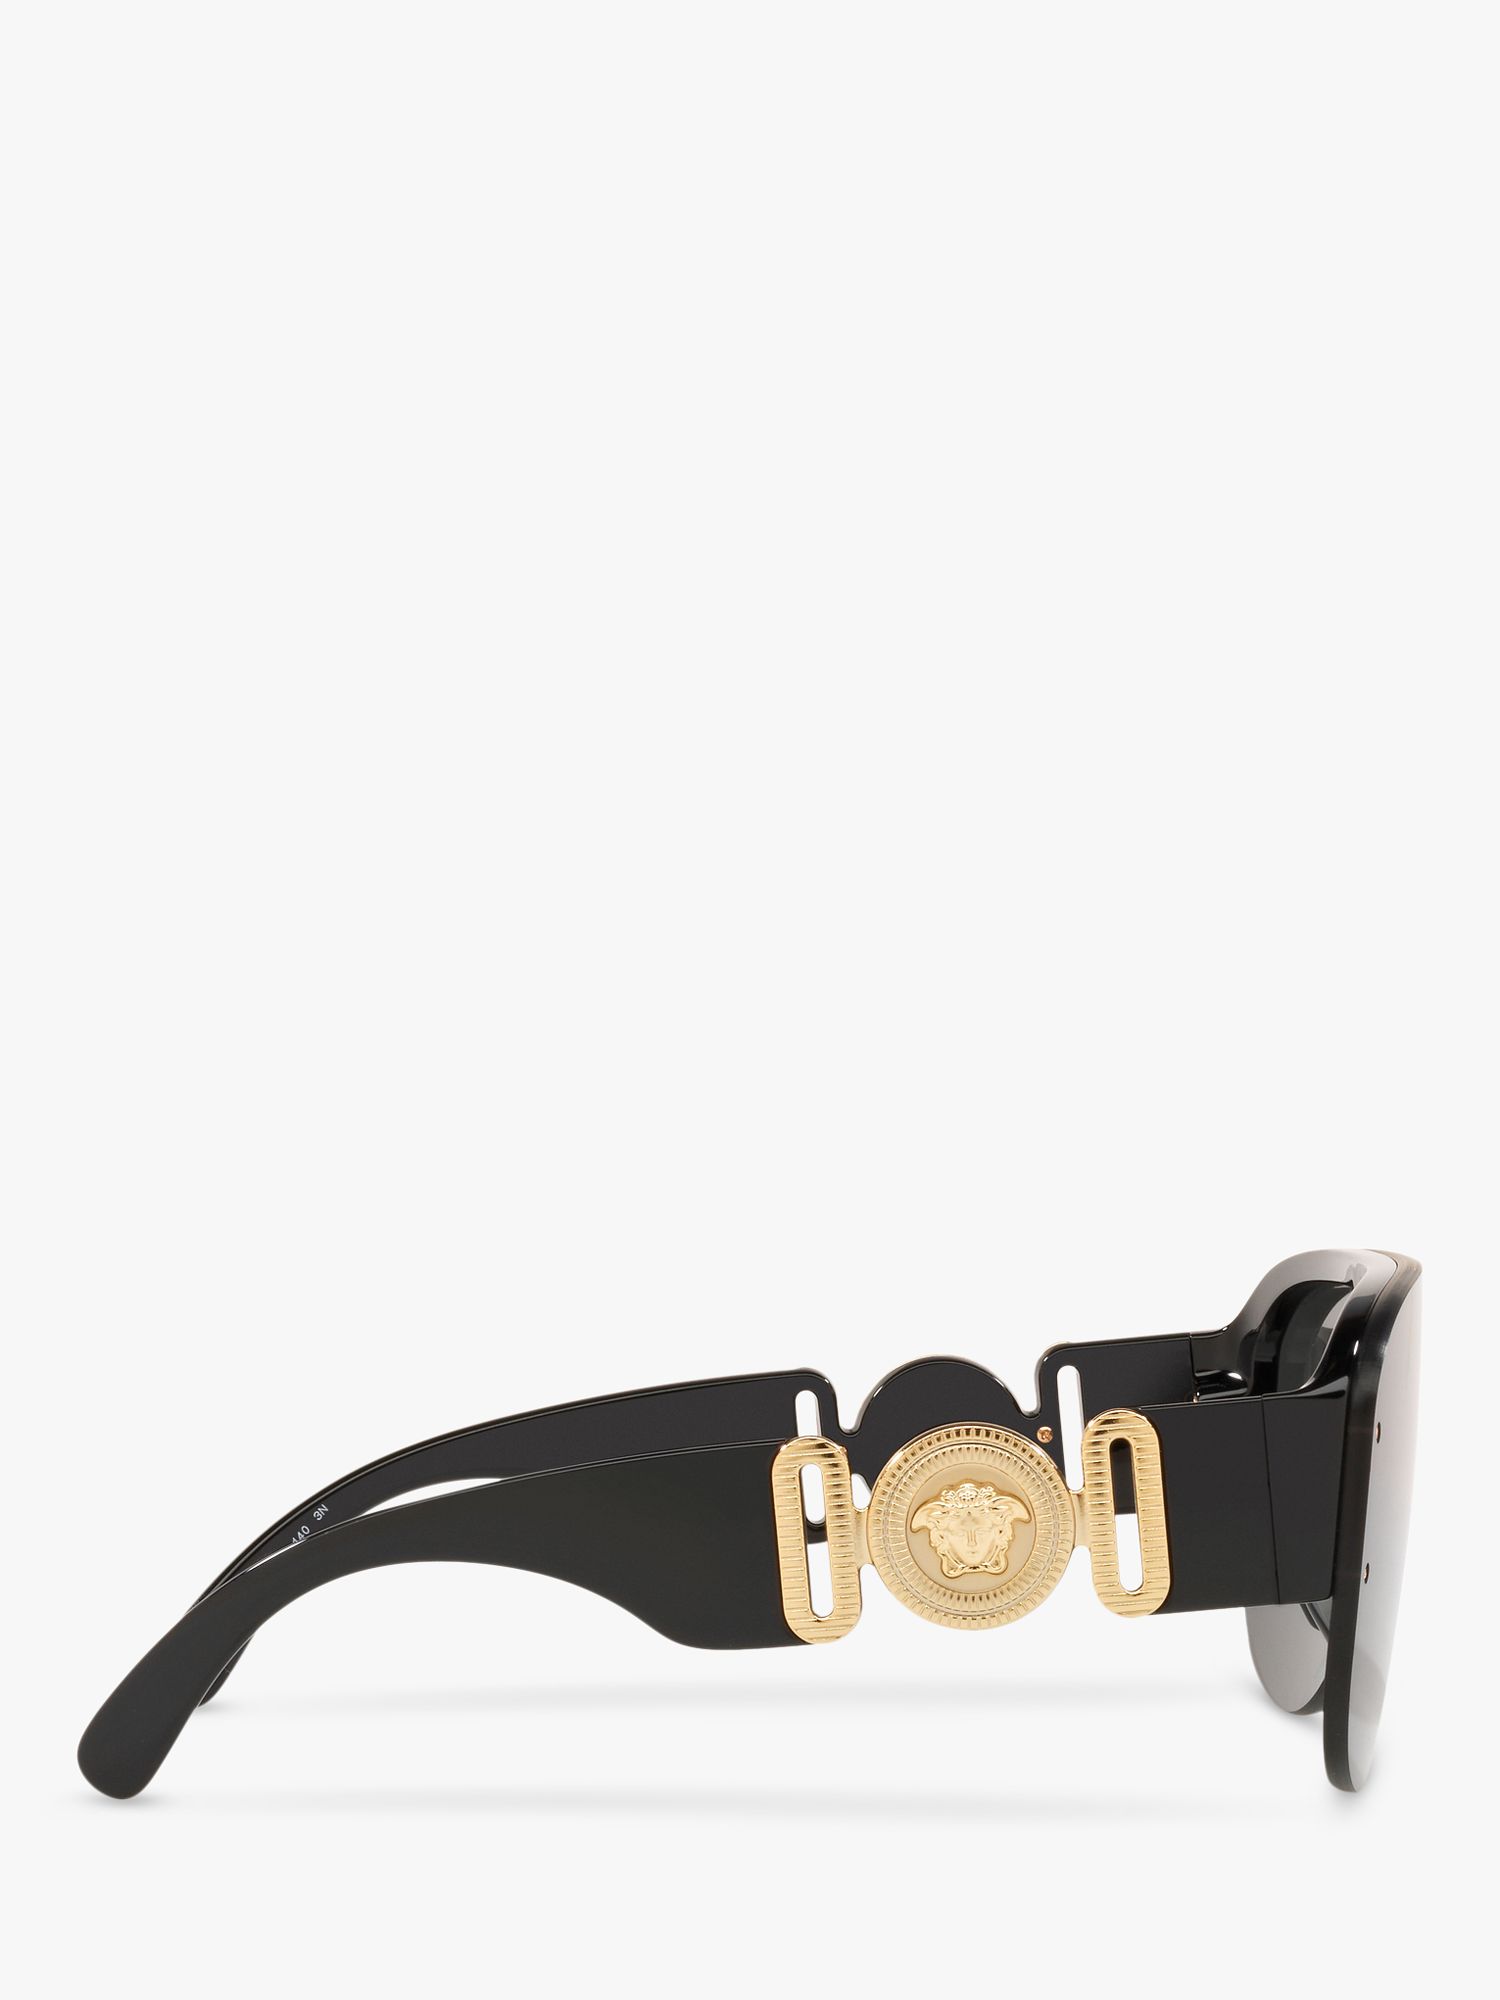 Versace VE4391 Women's Irregular Sunglasses, Black/Grey